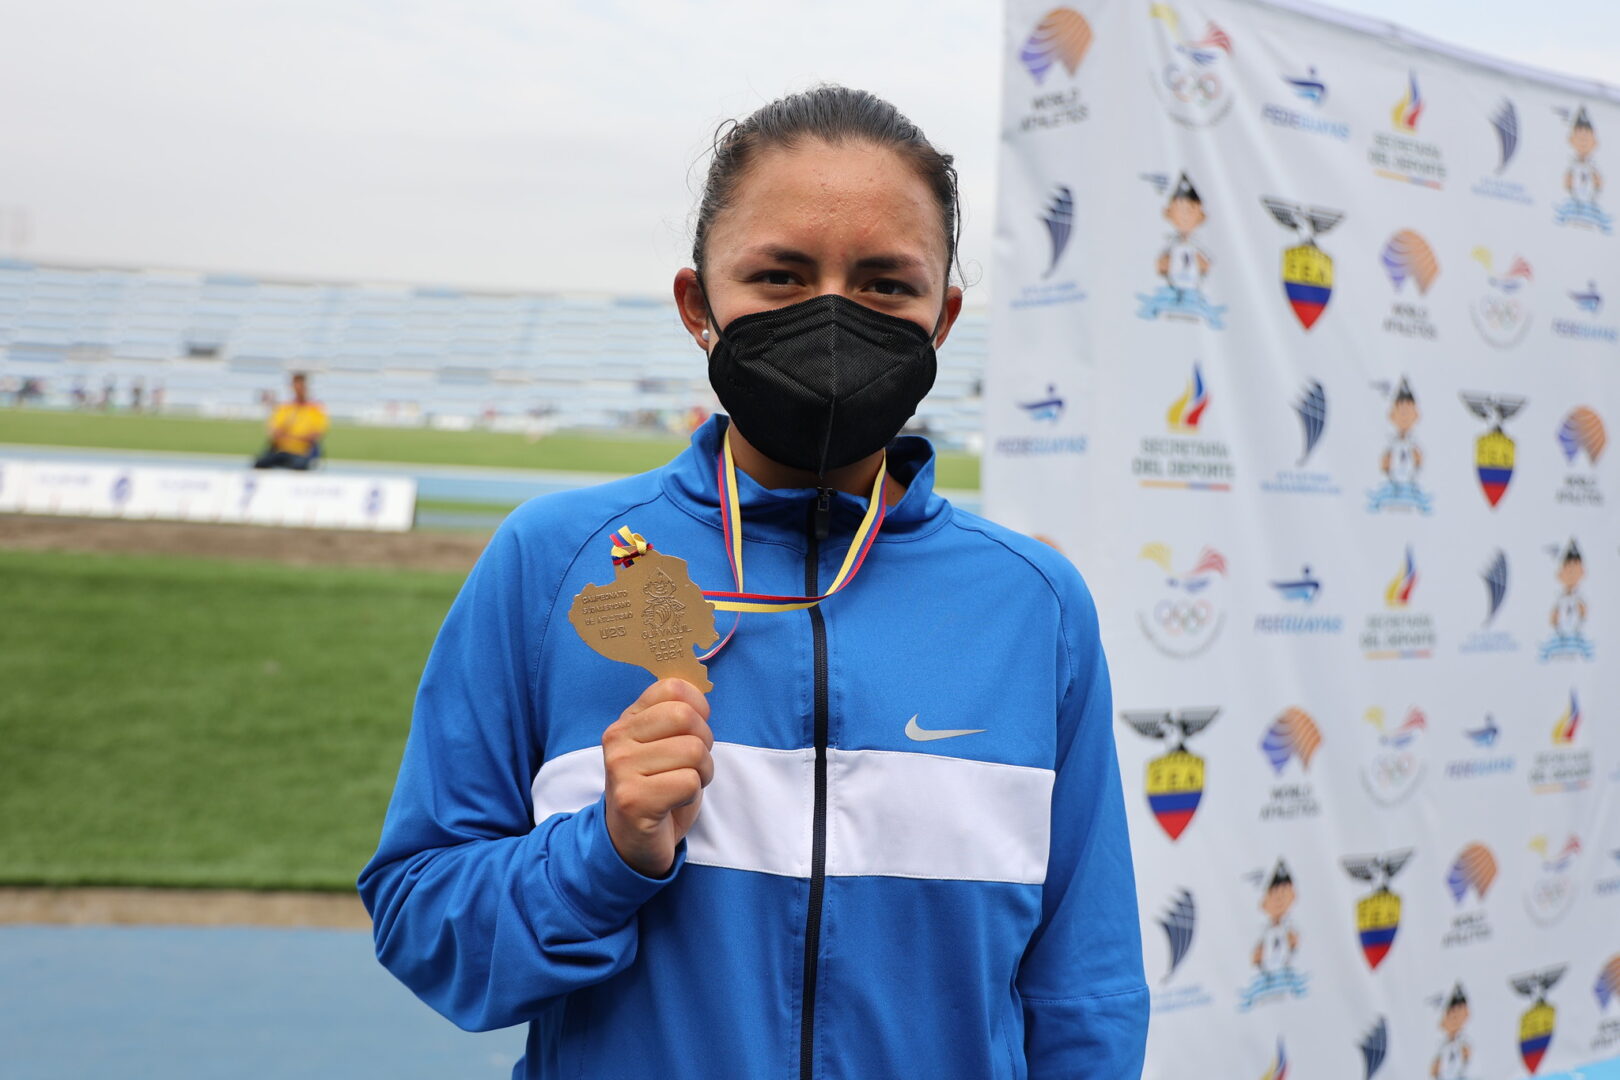 Glenda Morejón vence en los 20 km del Sudamericano sub 23